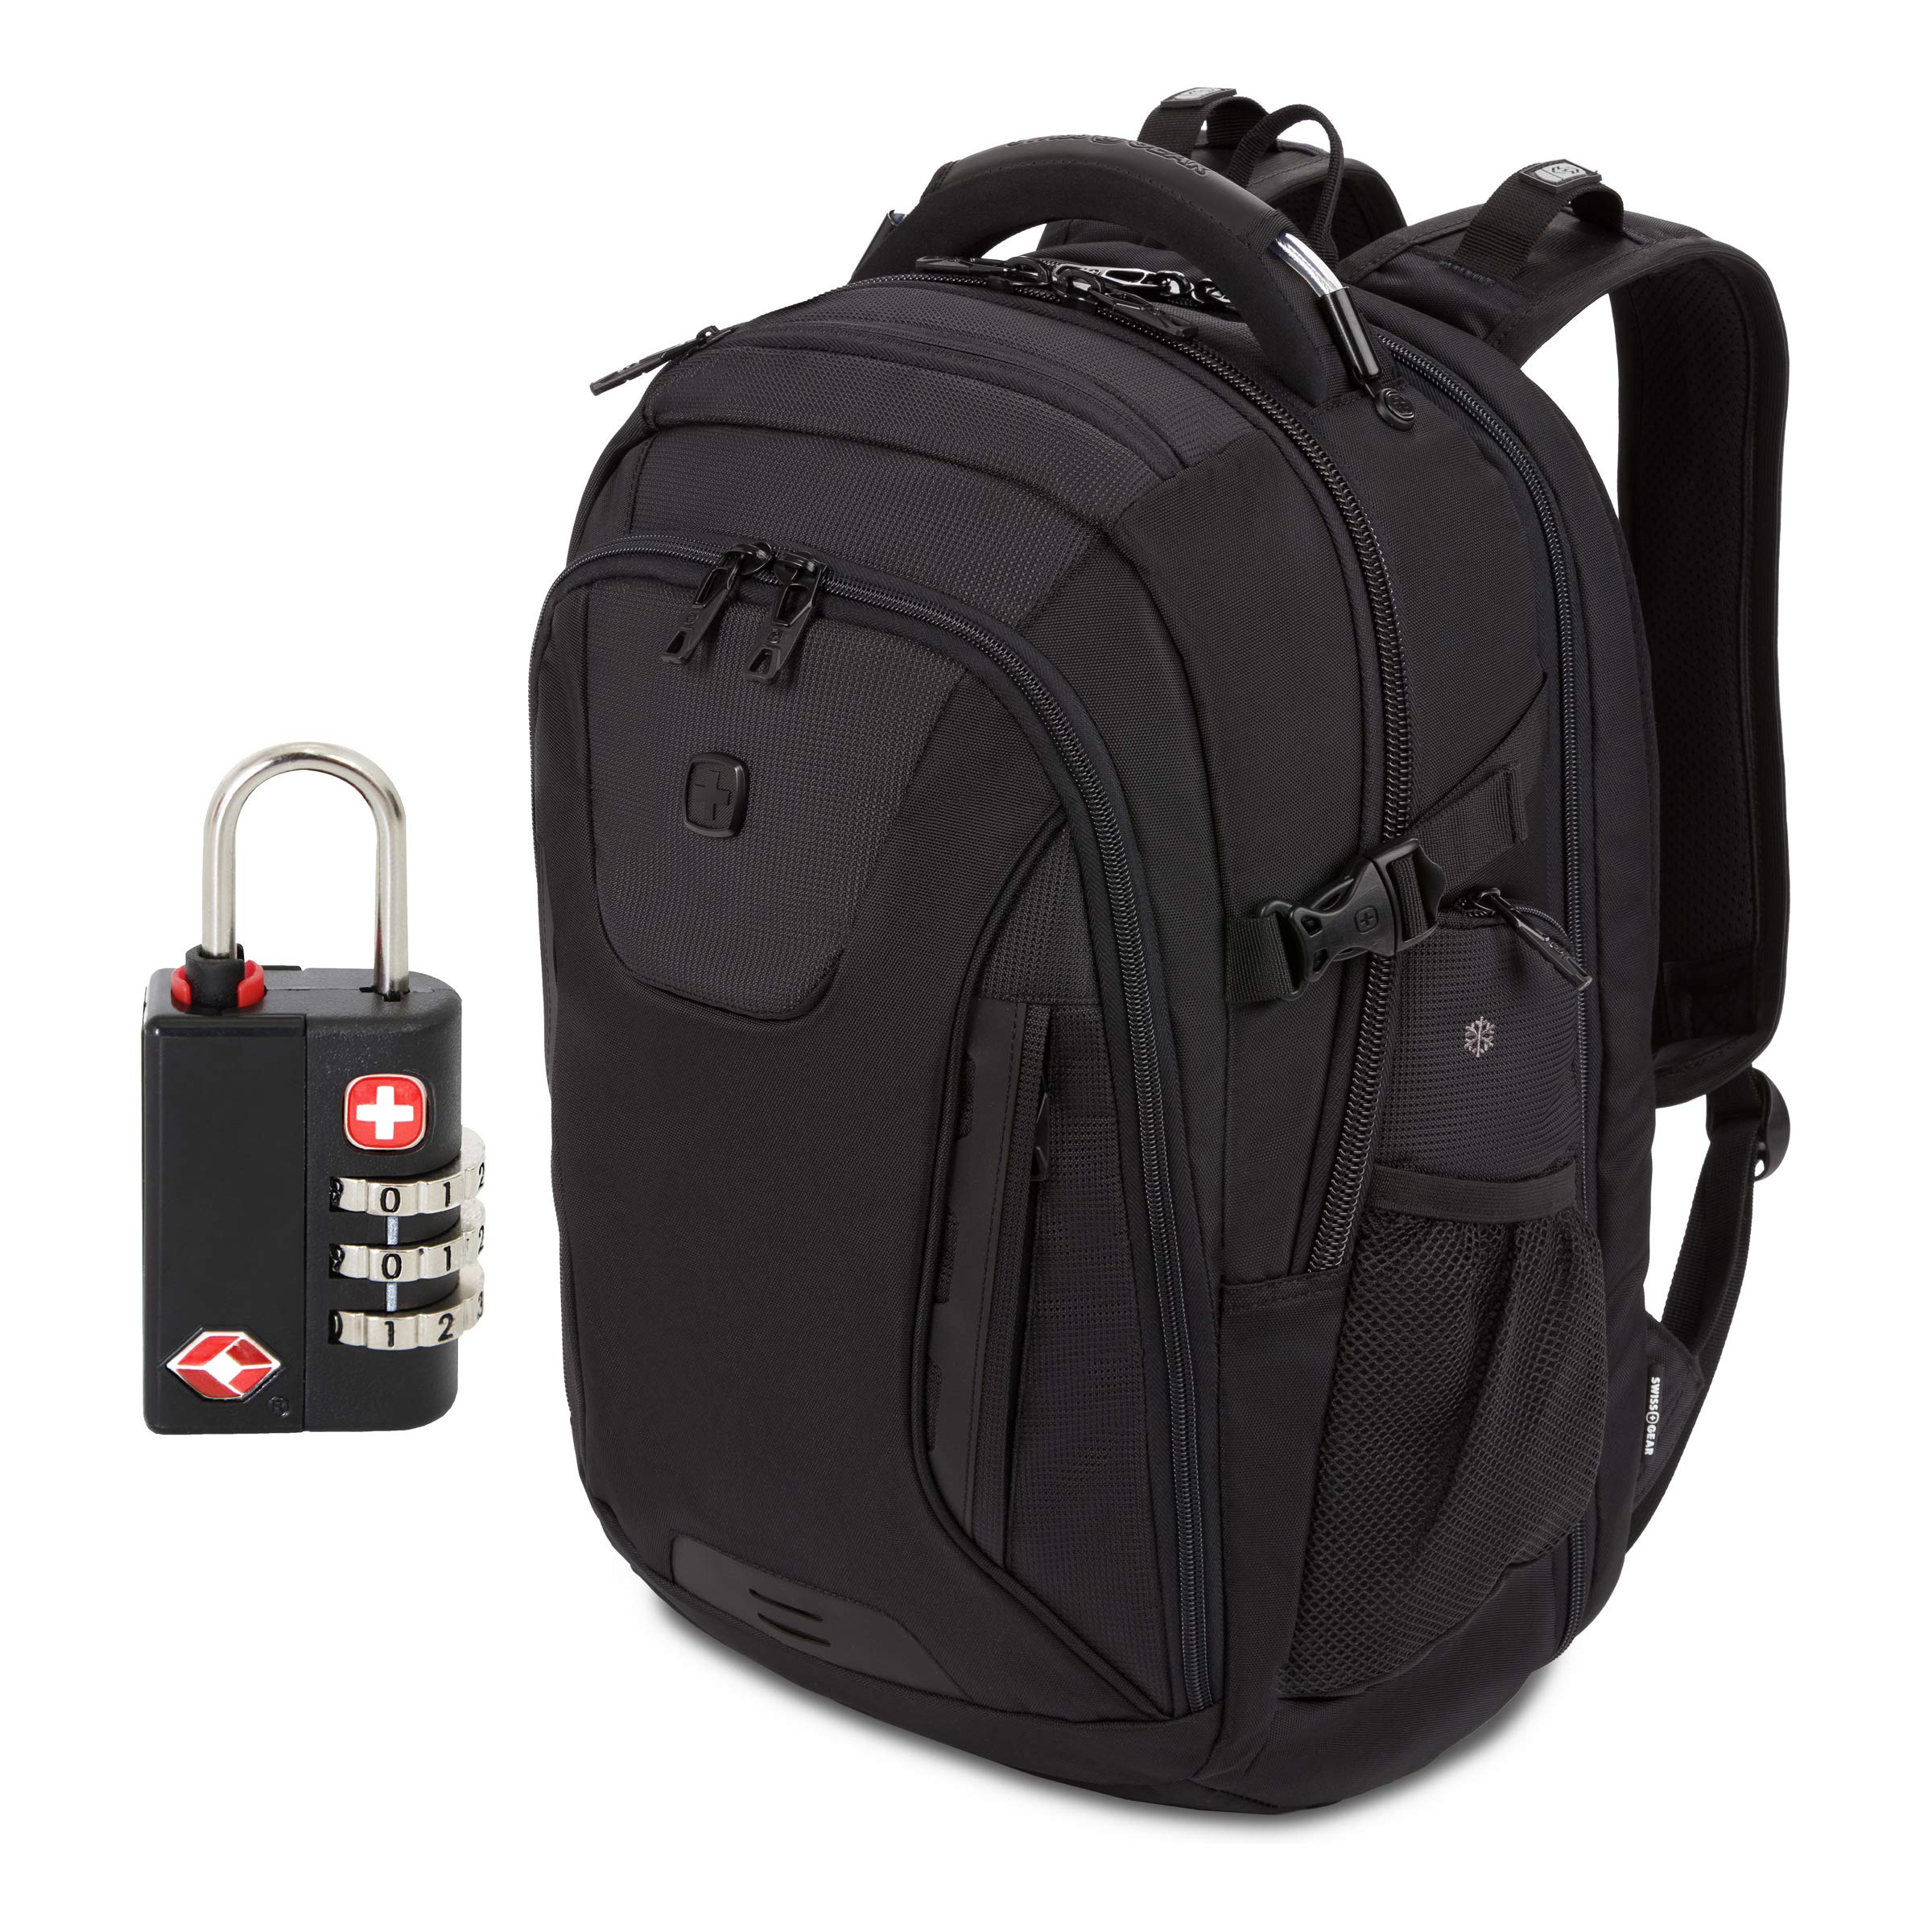 SwissGear 5358 USB ScanSmart Laptop Backpack. Abrasion